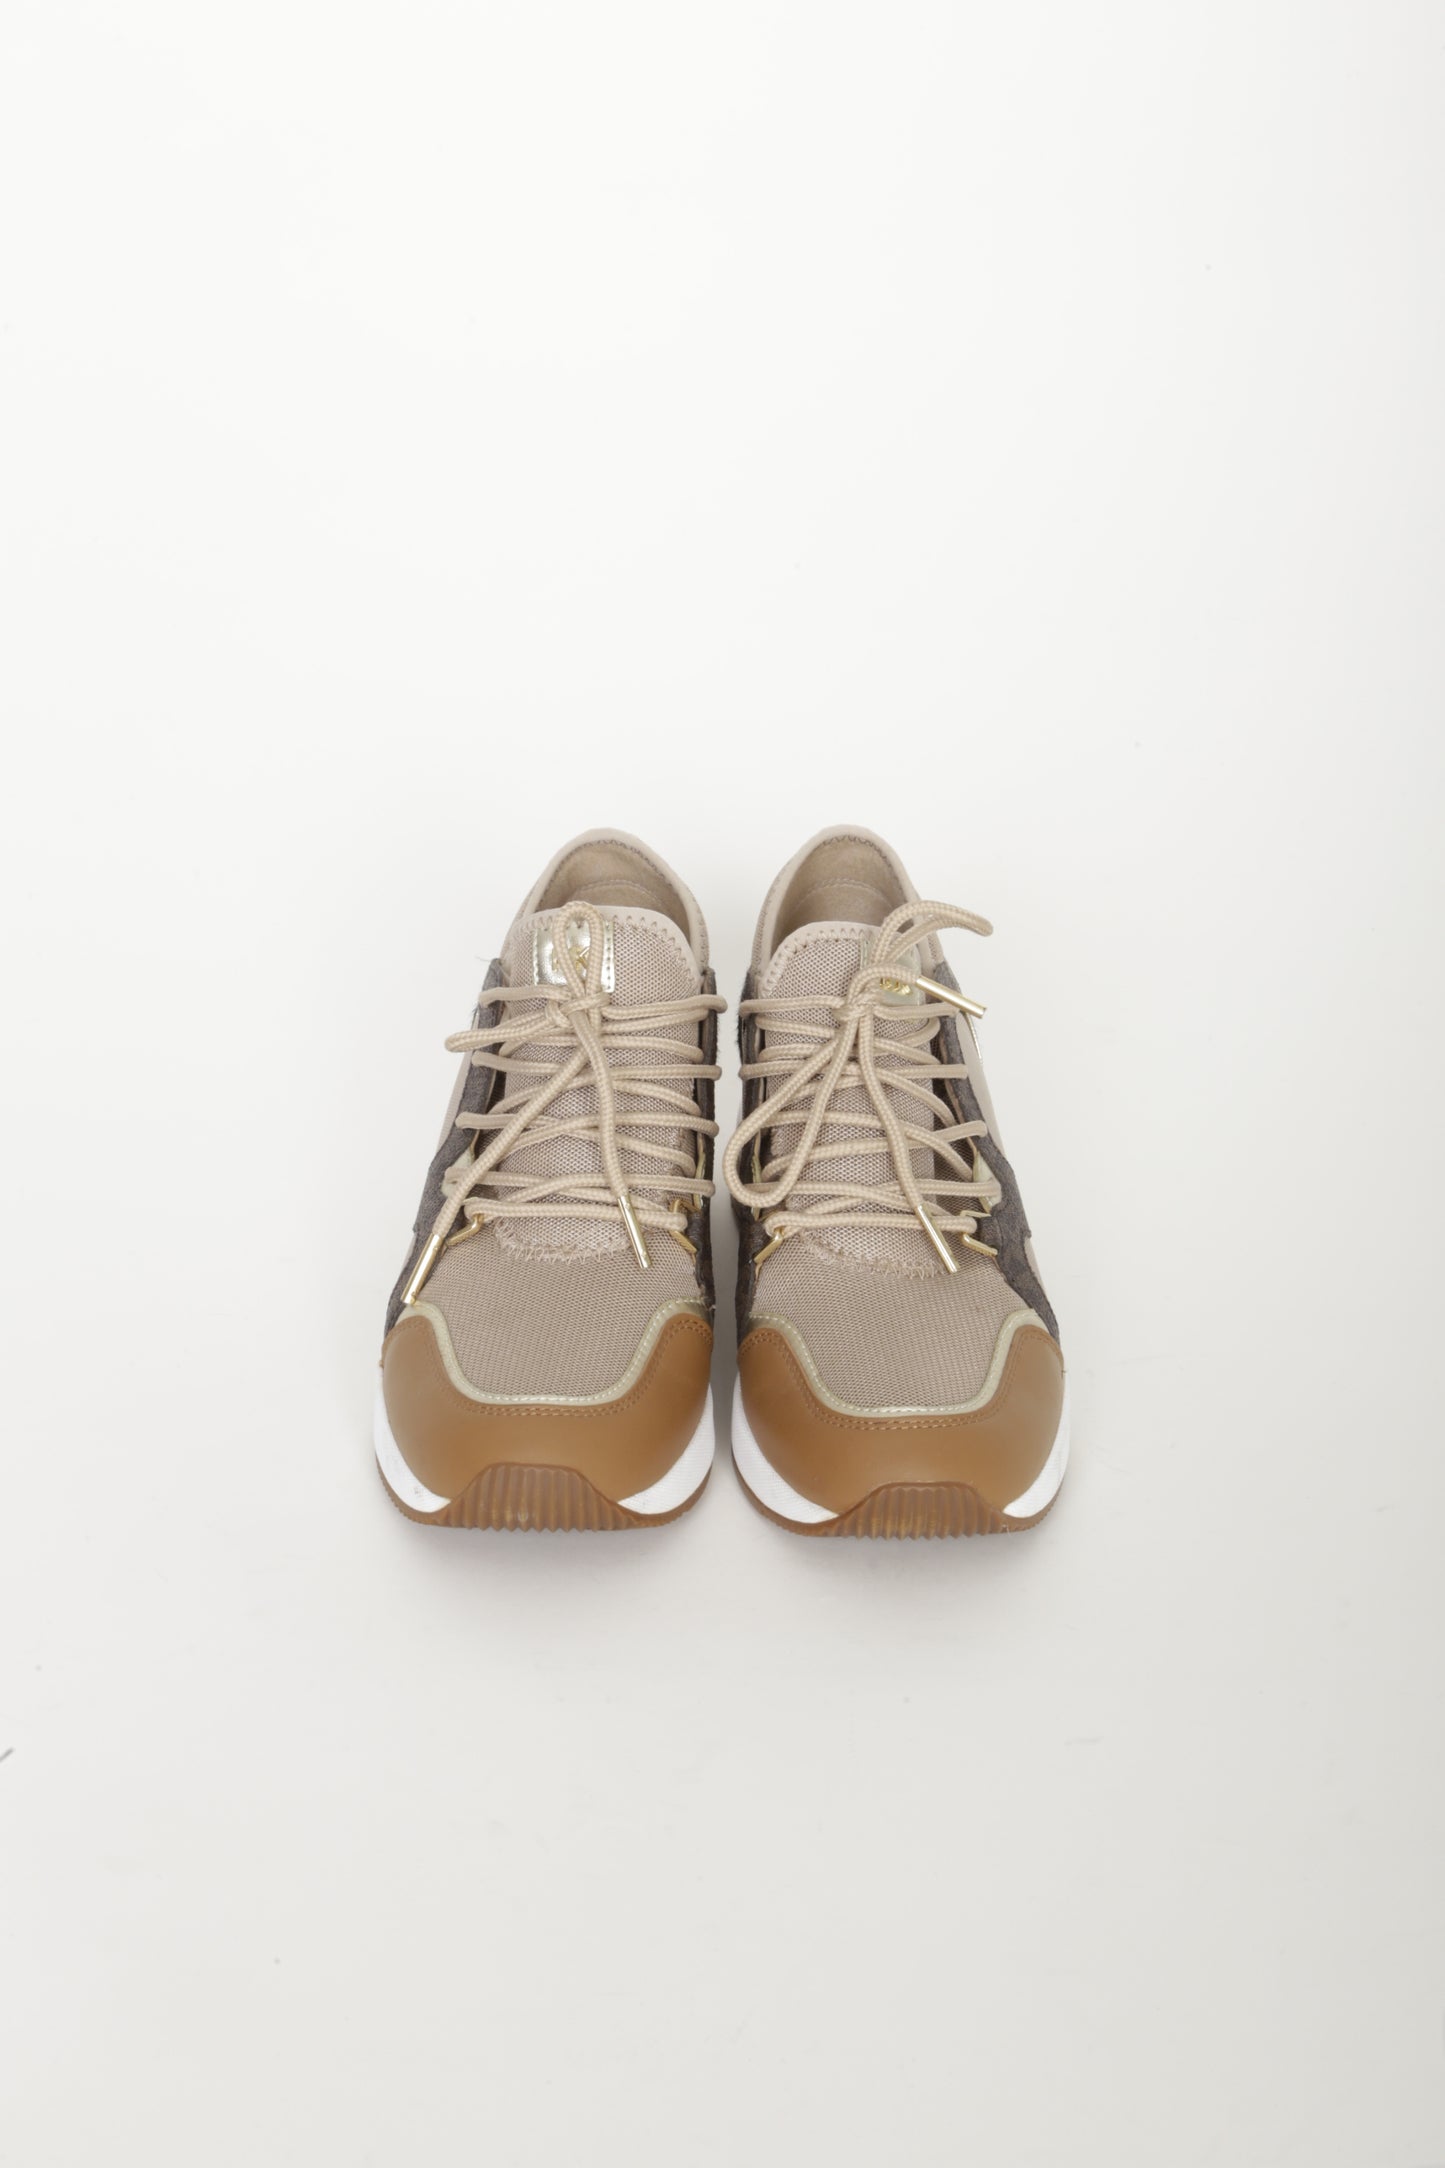 Michael Kors Womens Brown Sneakers Size 7